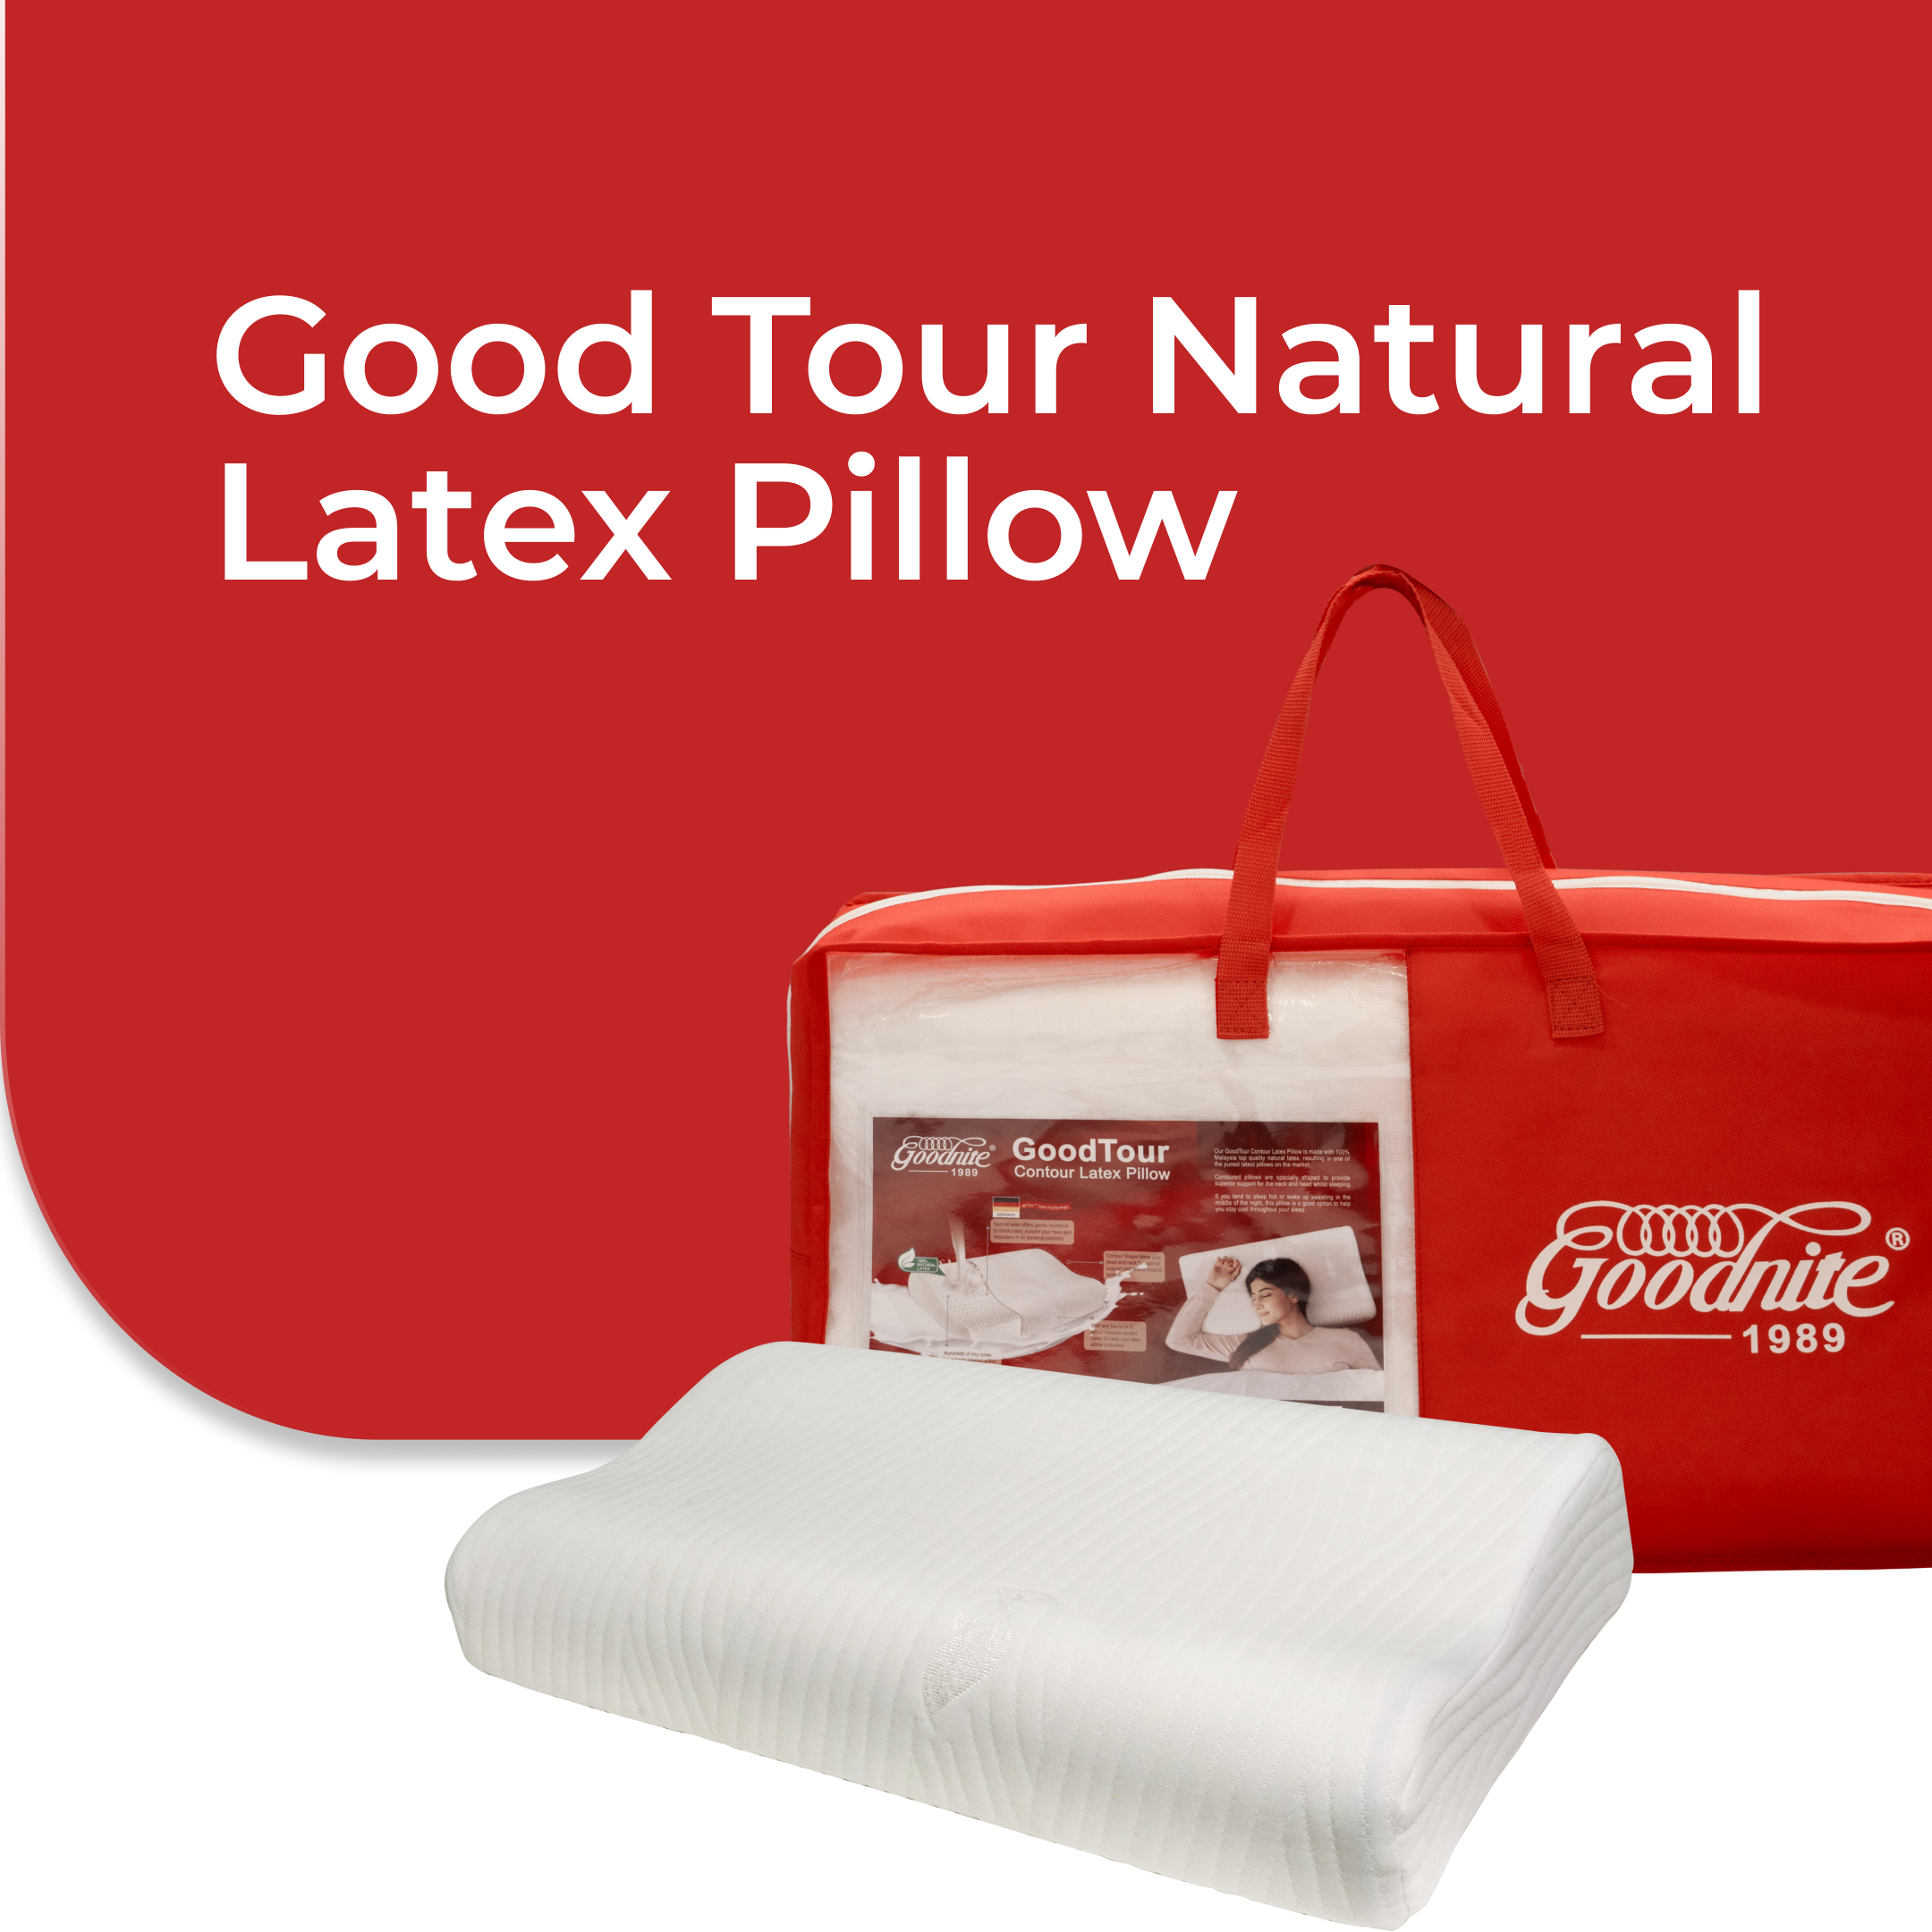 Good Tour Natural Latex Pillow v new